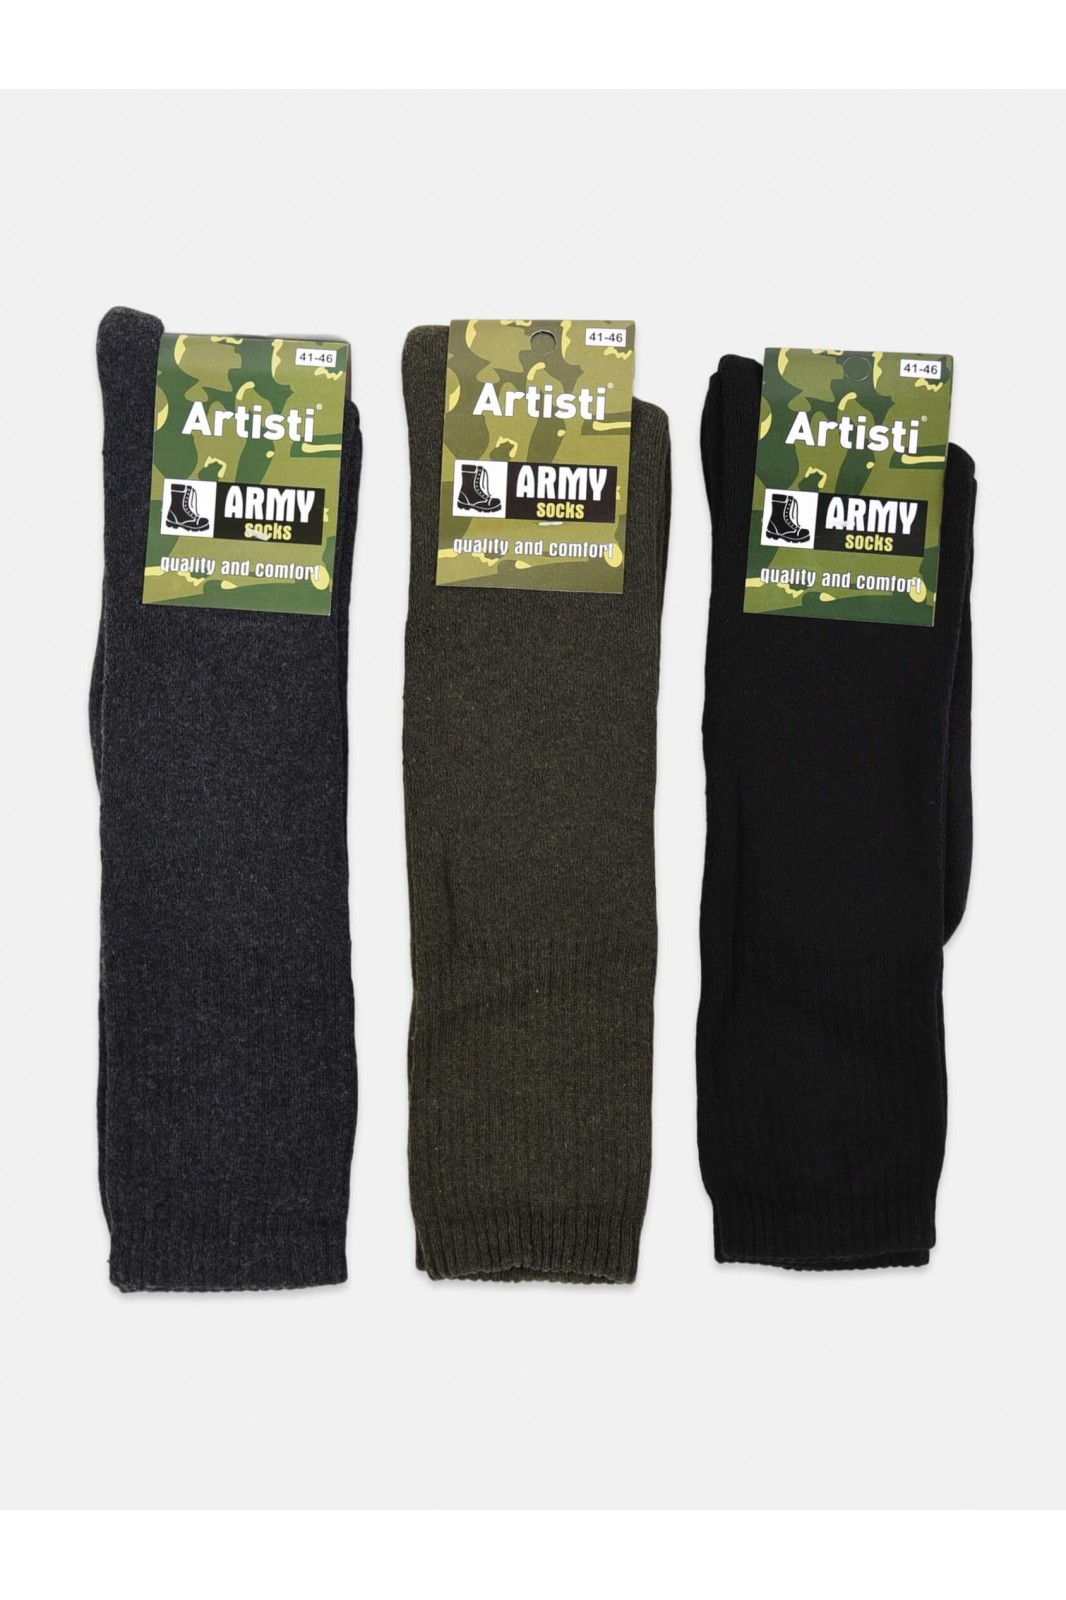 Cotton boot socks ARTISTI in 3 shades